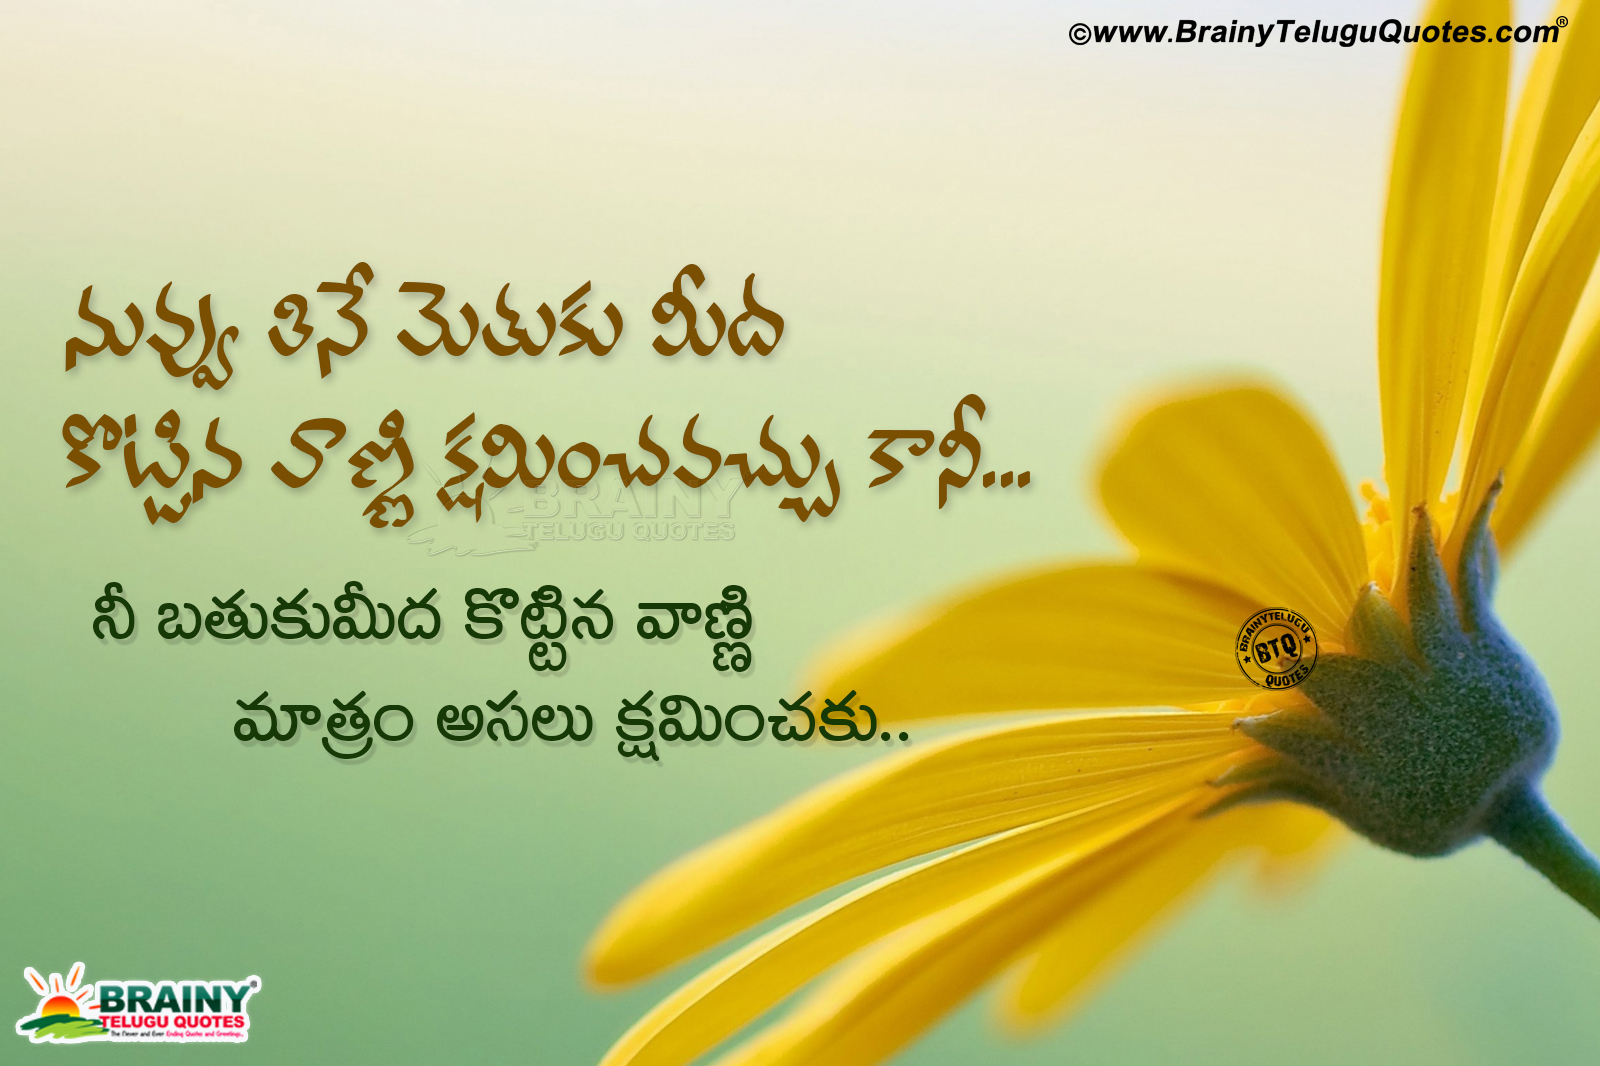 Telugu Life Quotes, Best Life Quotes In Telugu, Most - Best Latest Life Quotes Telugu - HD Wallpaper 